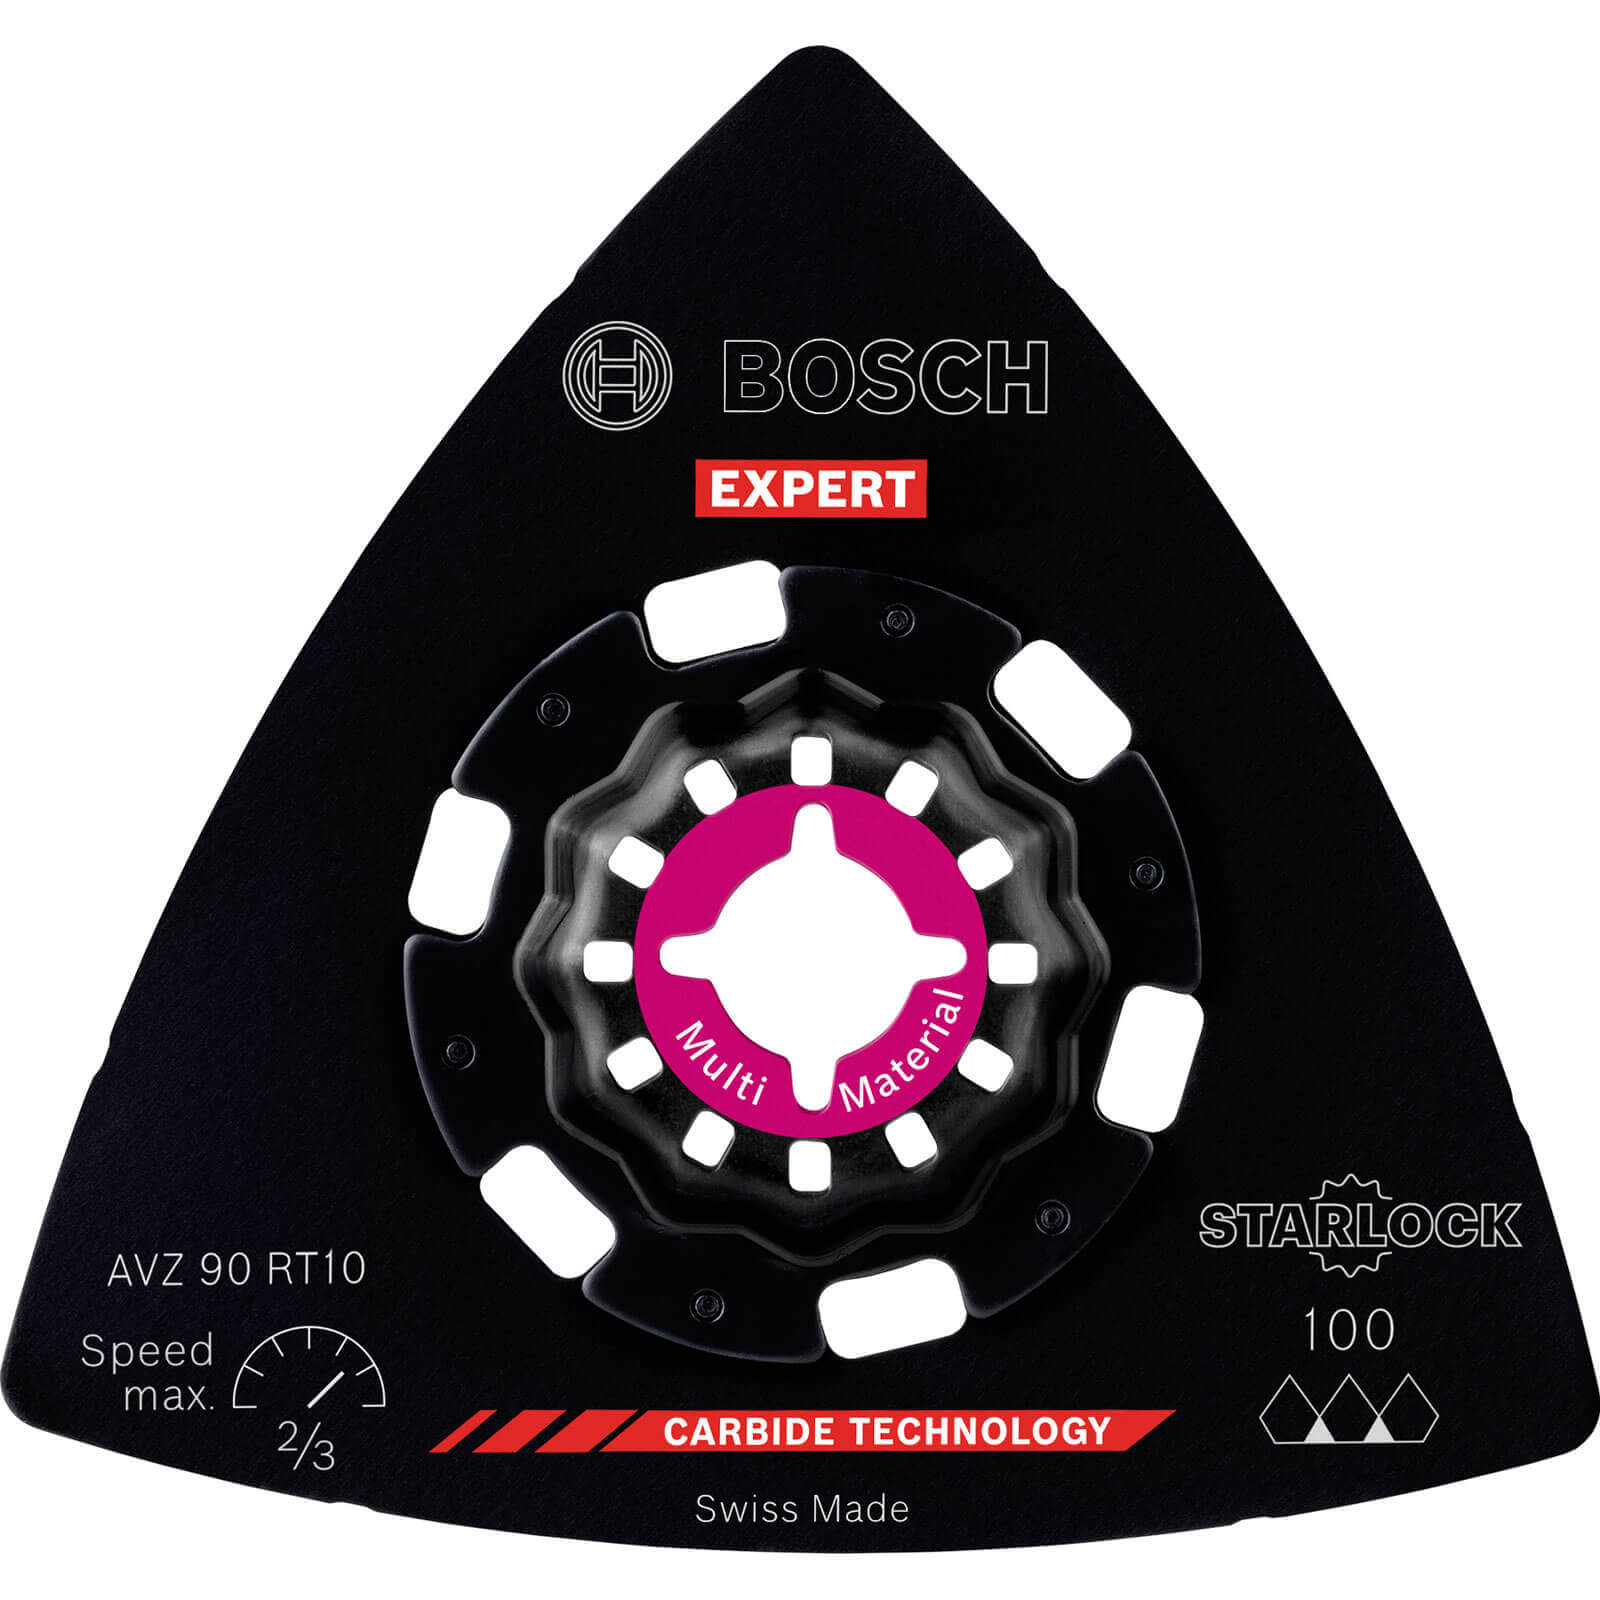 Photo of Bosch Expert Avz 90 Rt Starlock Oscillating Multi Tool Sanding Plate 90mm 100g Pack Of 1